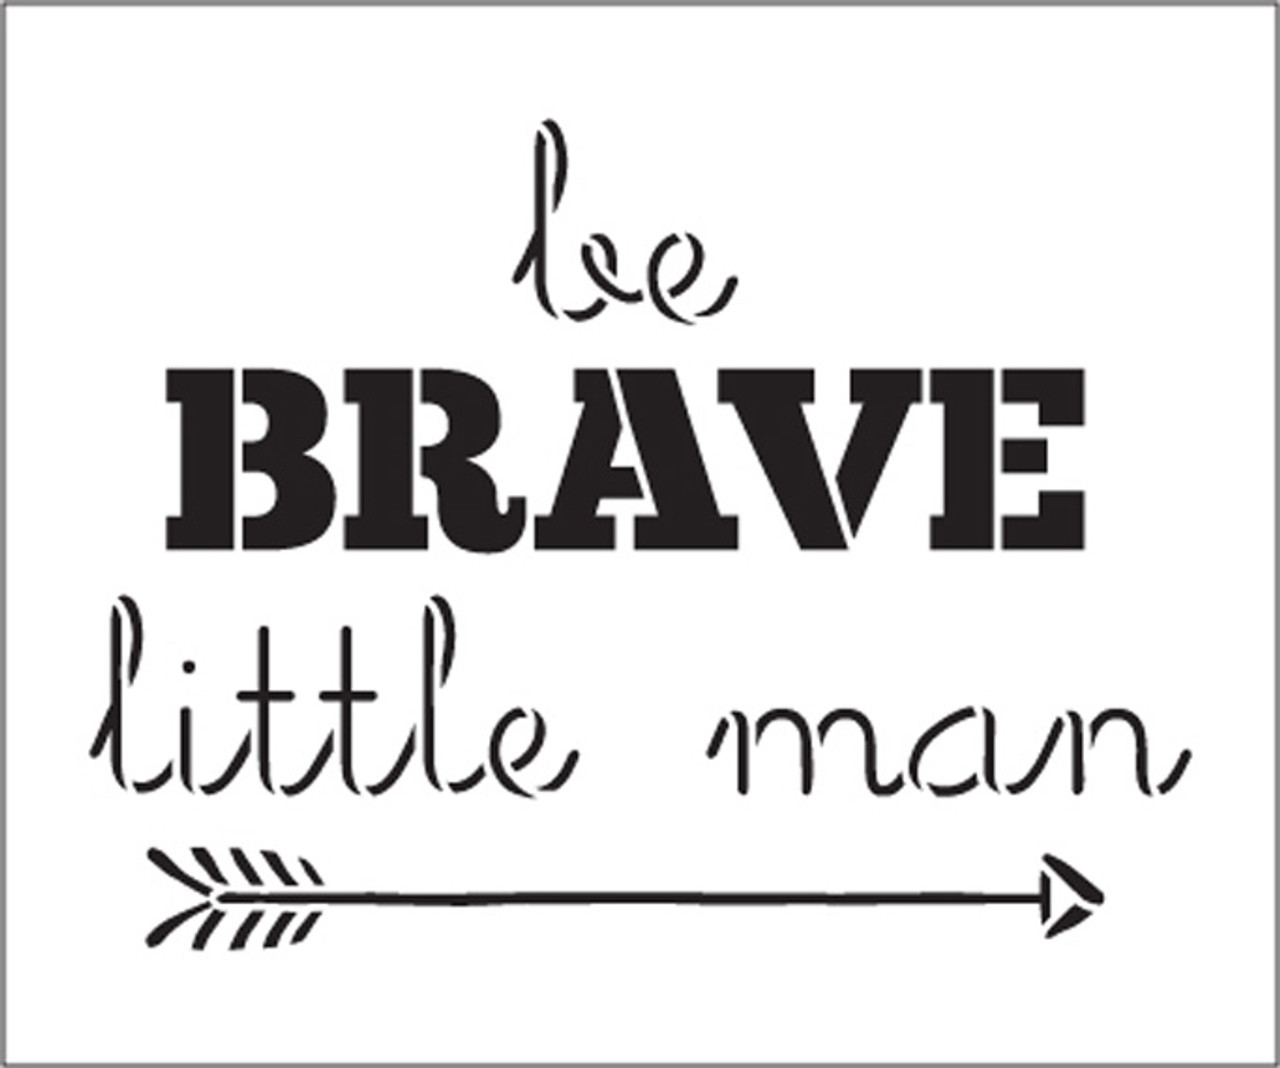 Be Brave Little Man - Arrow - Word Art Stencil - 18" x 15" - STCL1774_5 - by StudioR12